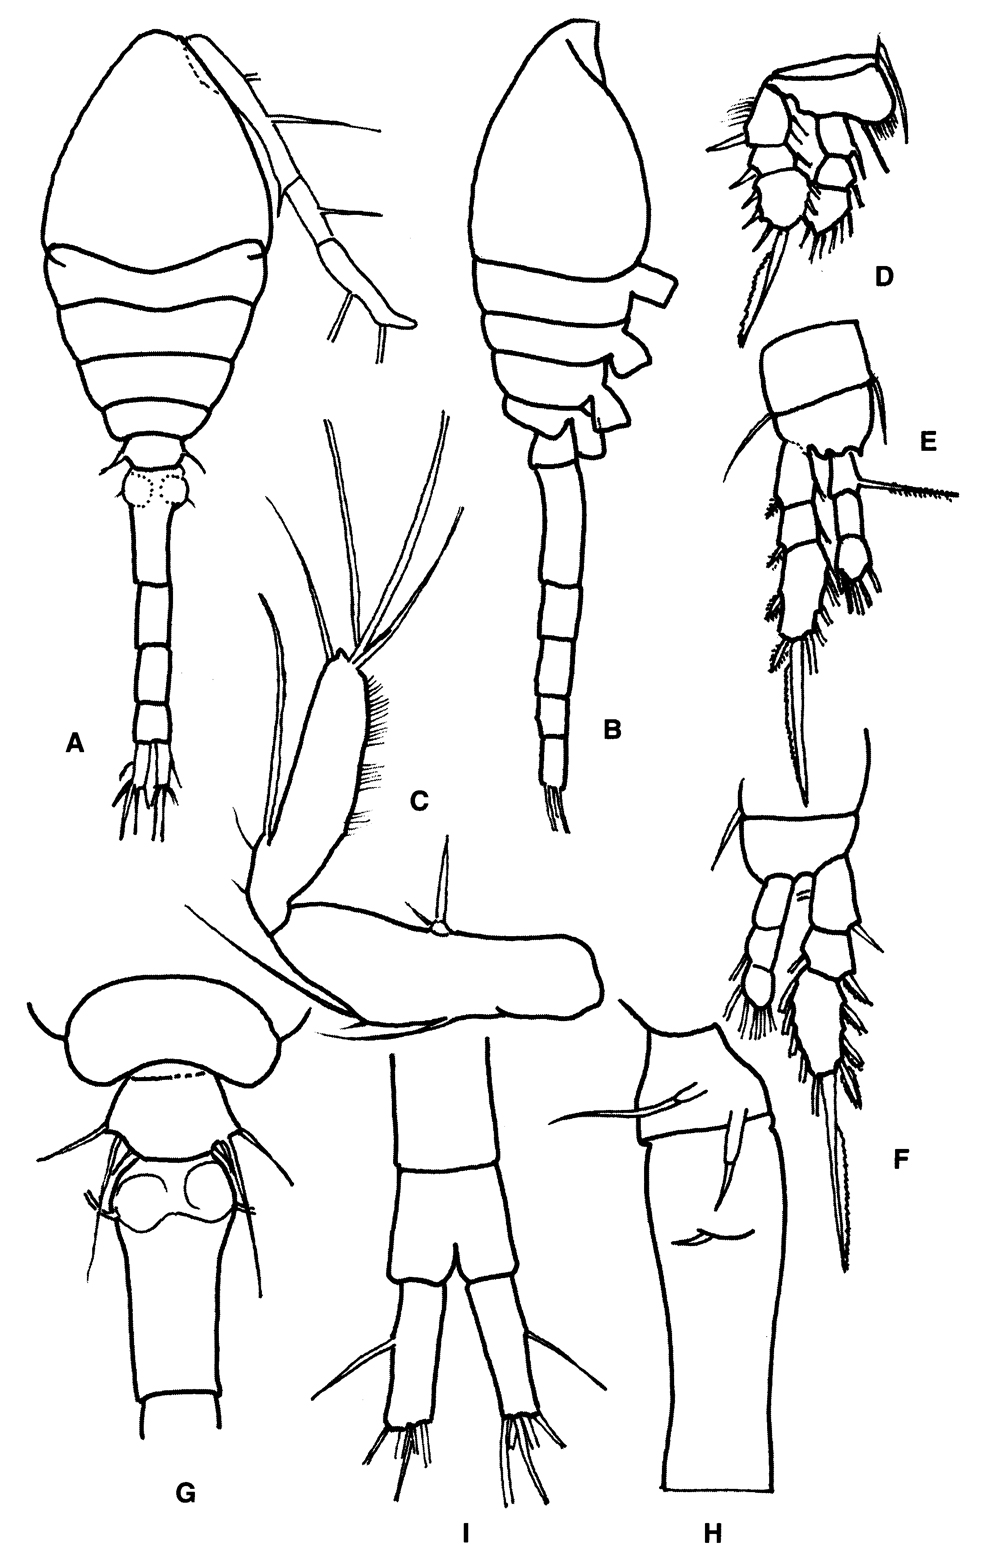 Species Dioithona minuta - Plate 4 of morphological figures